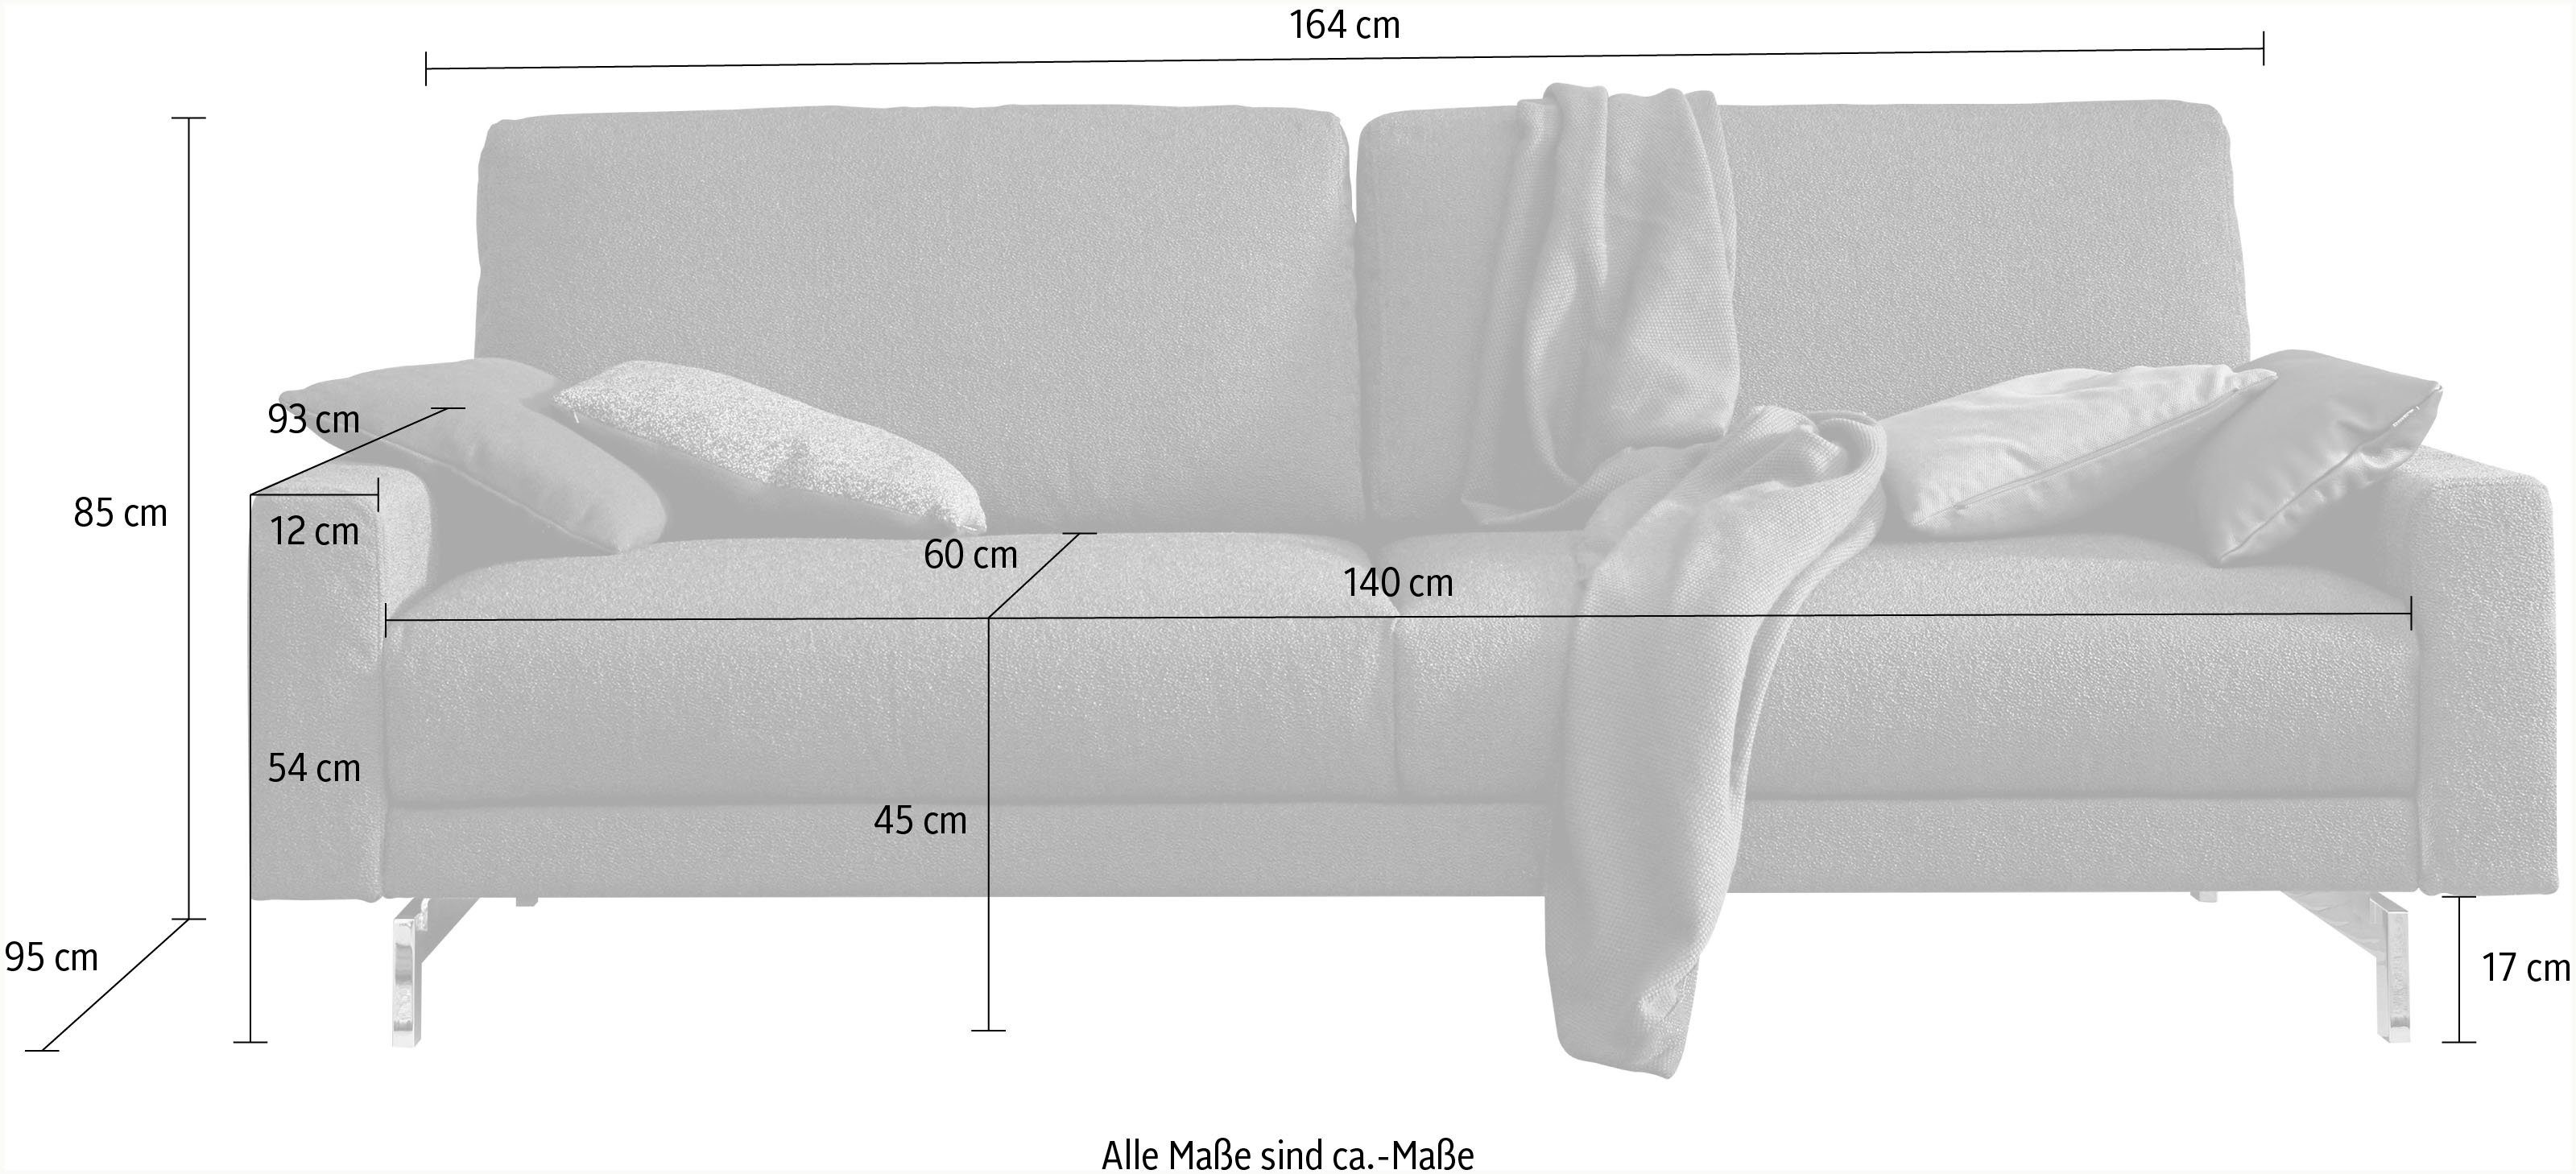 hülsta sofa 2-Sitzer hs.450, niedrig, chromfarben cm Fuß 164 glänzend, Breite Armlehne